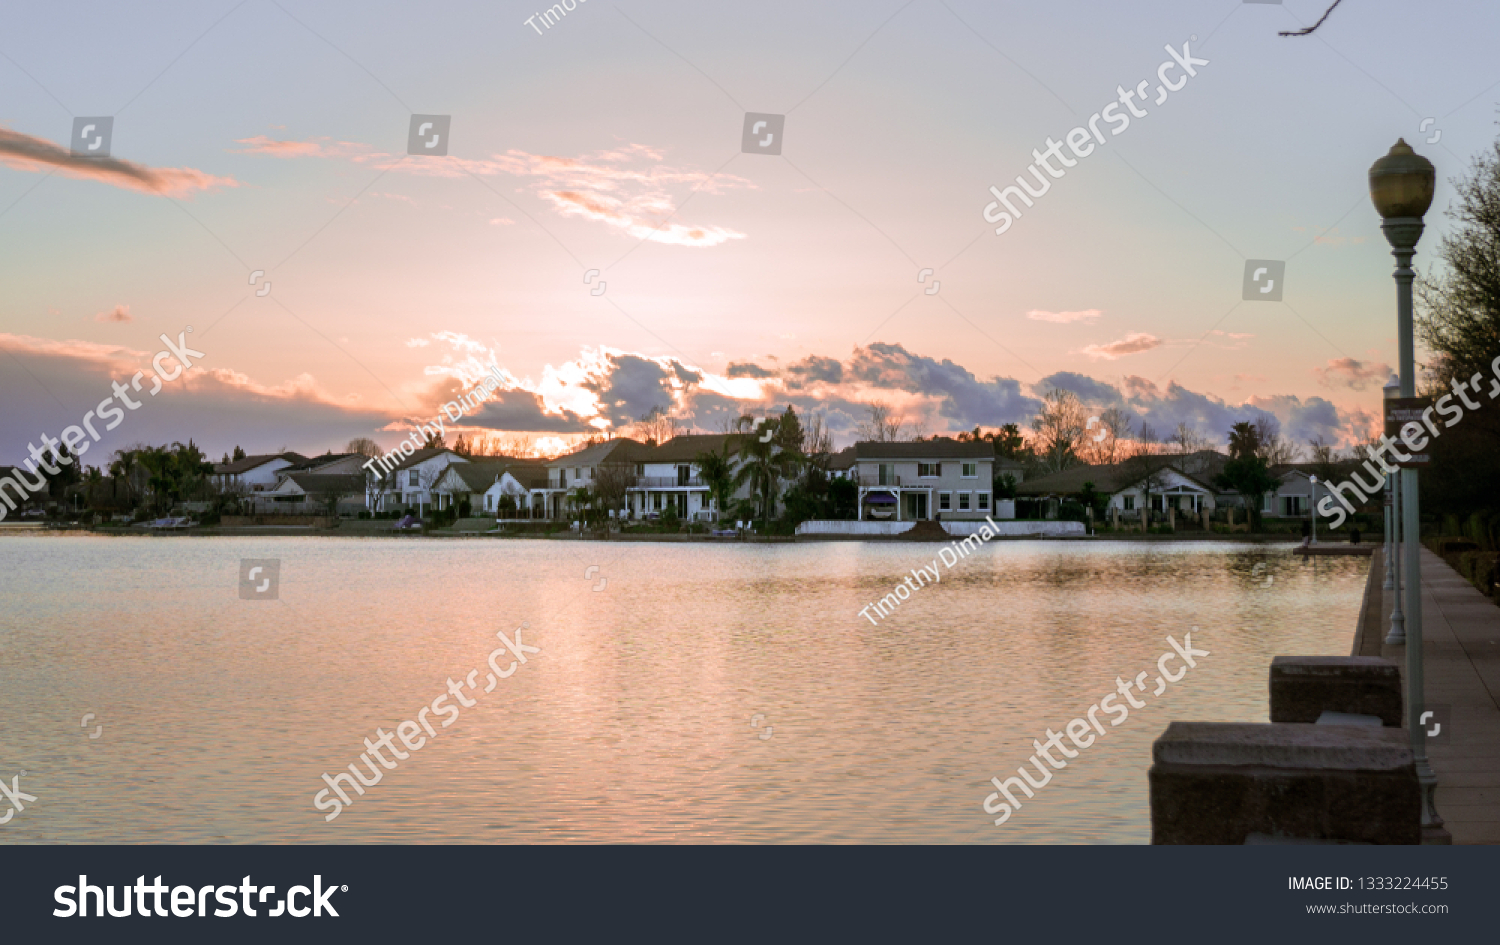 Sunset over man-made lake in Elk Grove California	 #1333224455